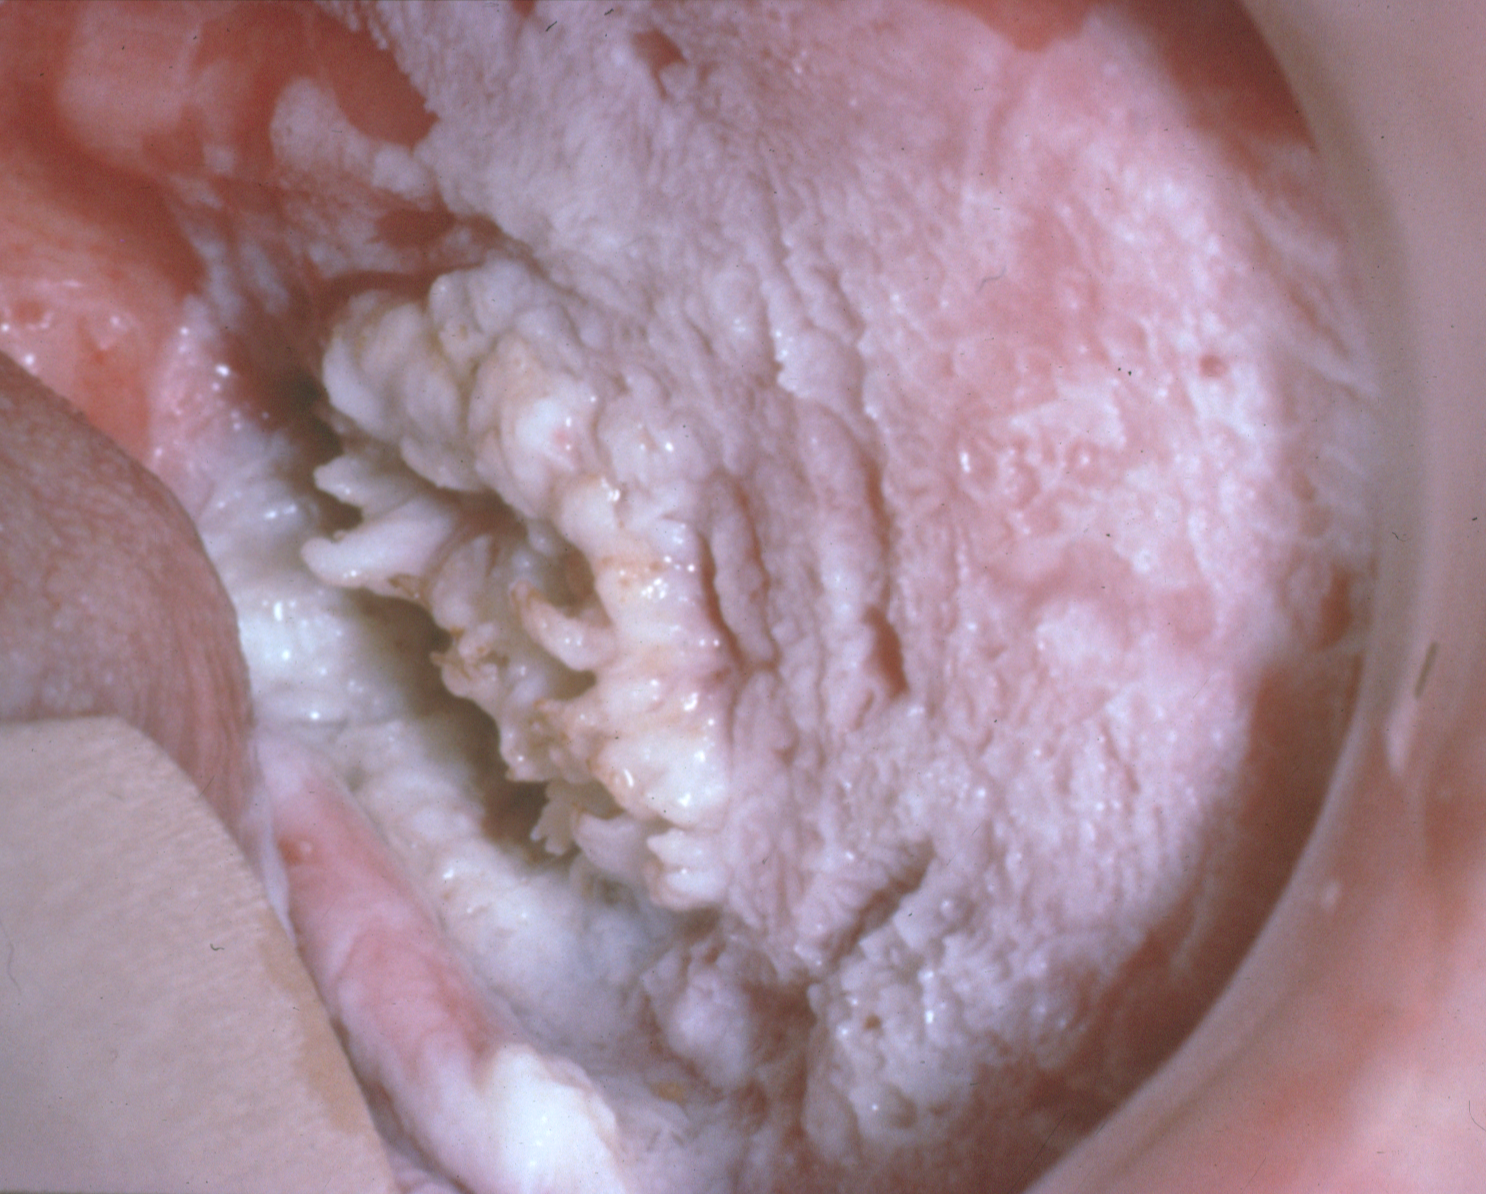 Photo of buccal vestibule exhibiting hyperkeratosis and verrucous carcinoma.